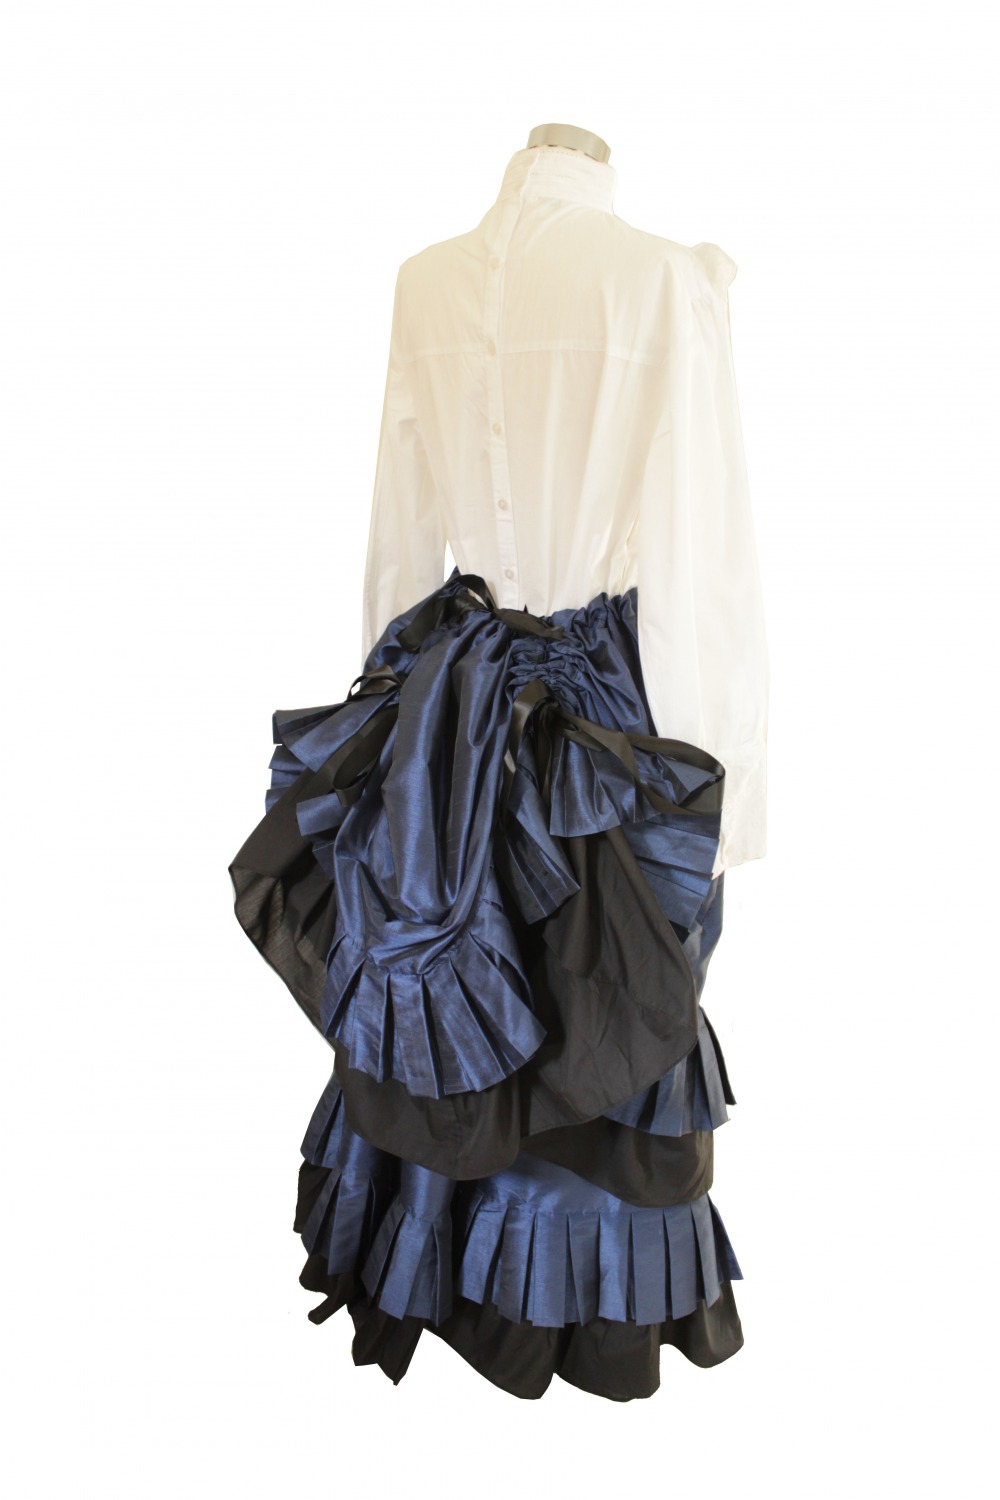 Ladies Victorian Edwardian Suffragette Costume Size 14 - 16 Image